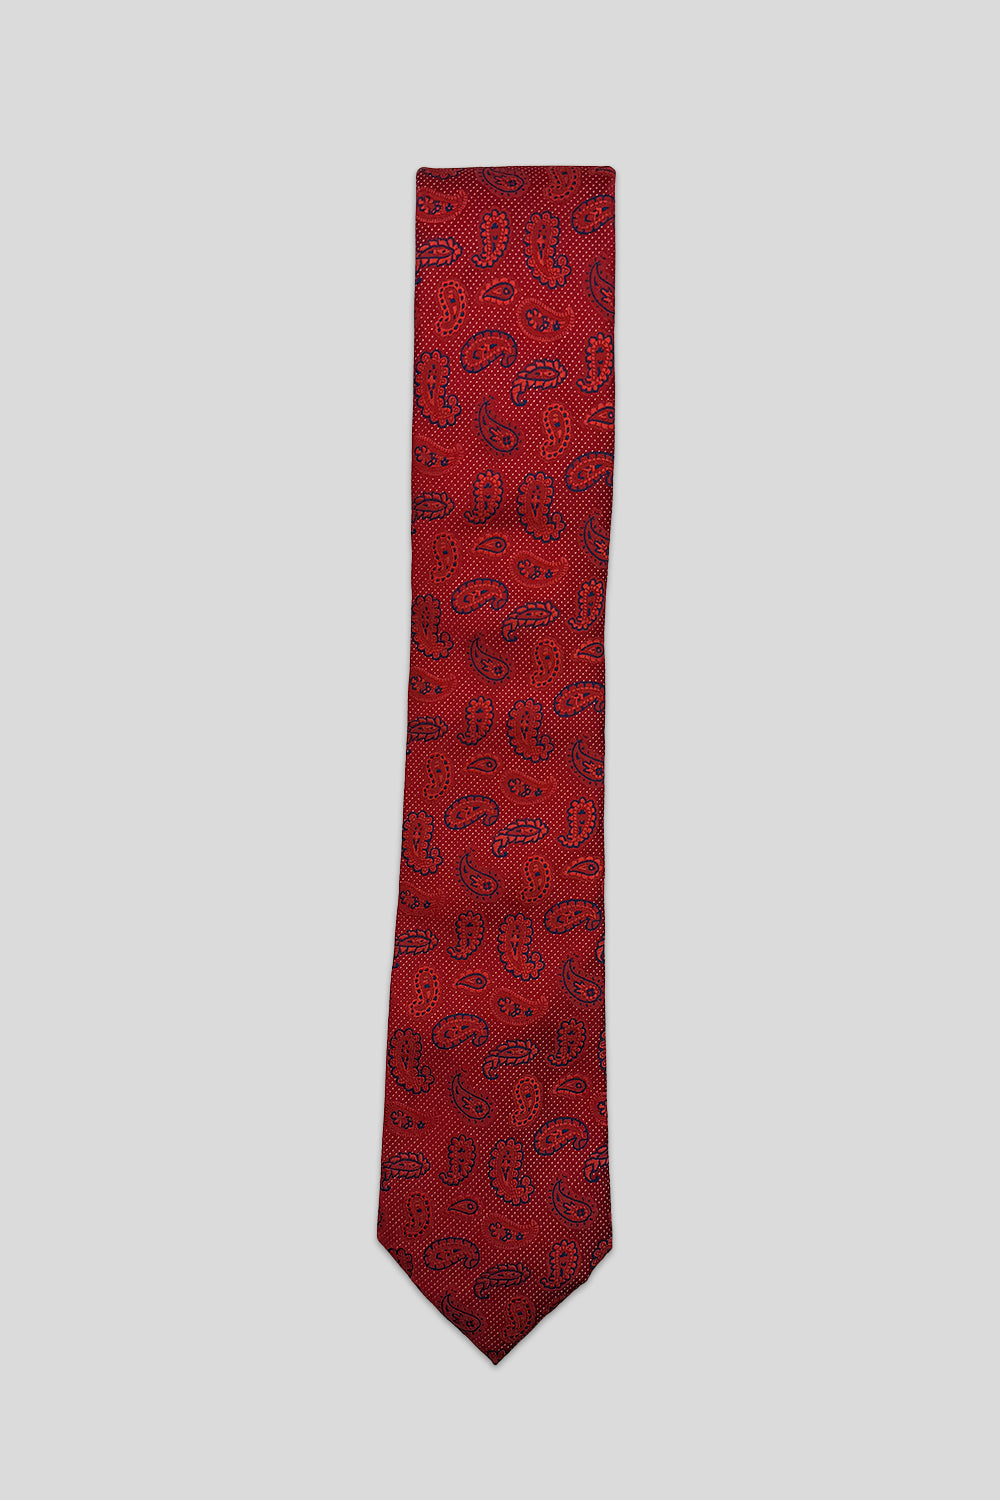 Corbata paisley roja